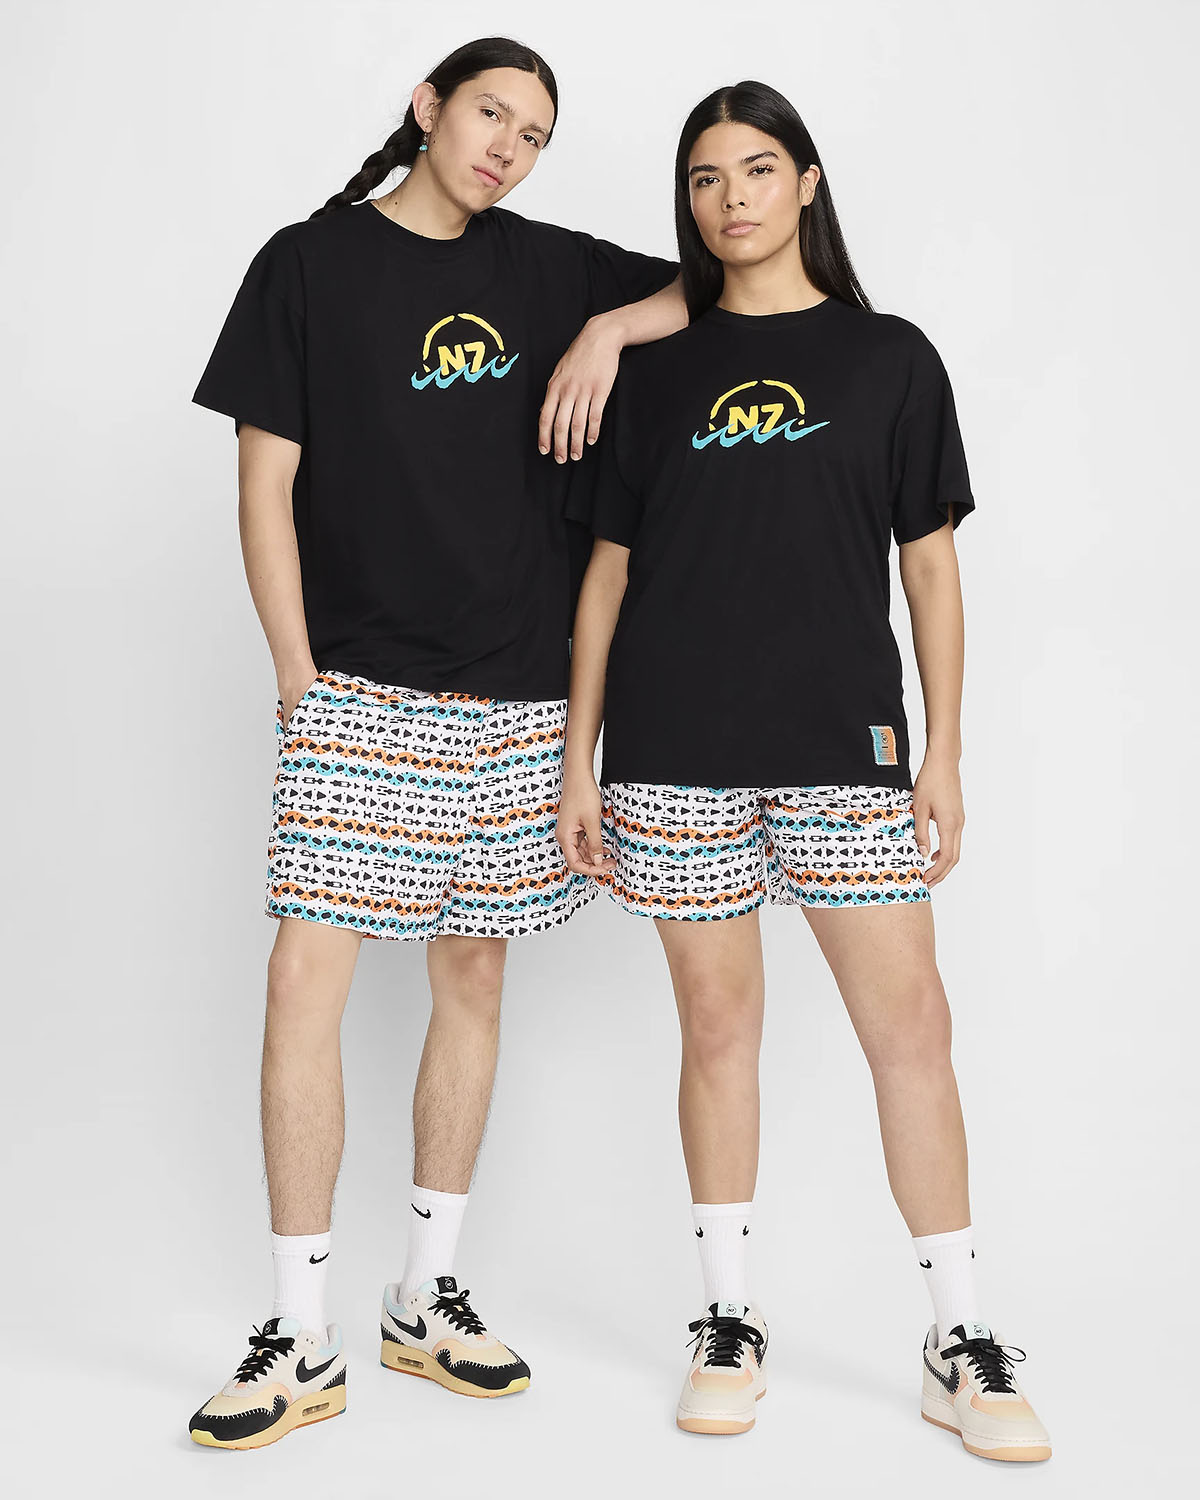 Nike Sportswear N7 Shirt and Shorts